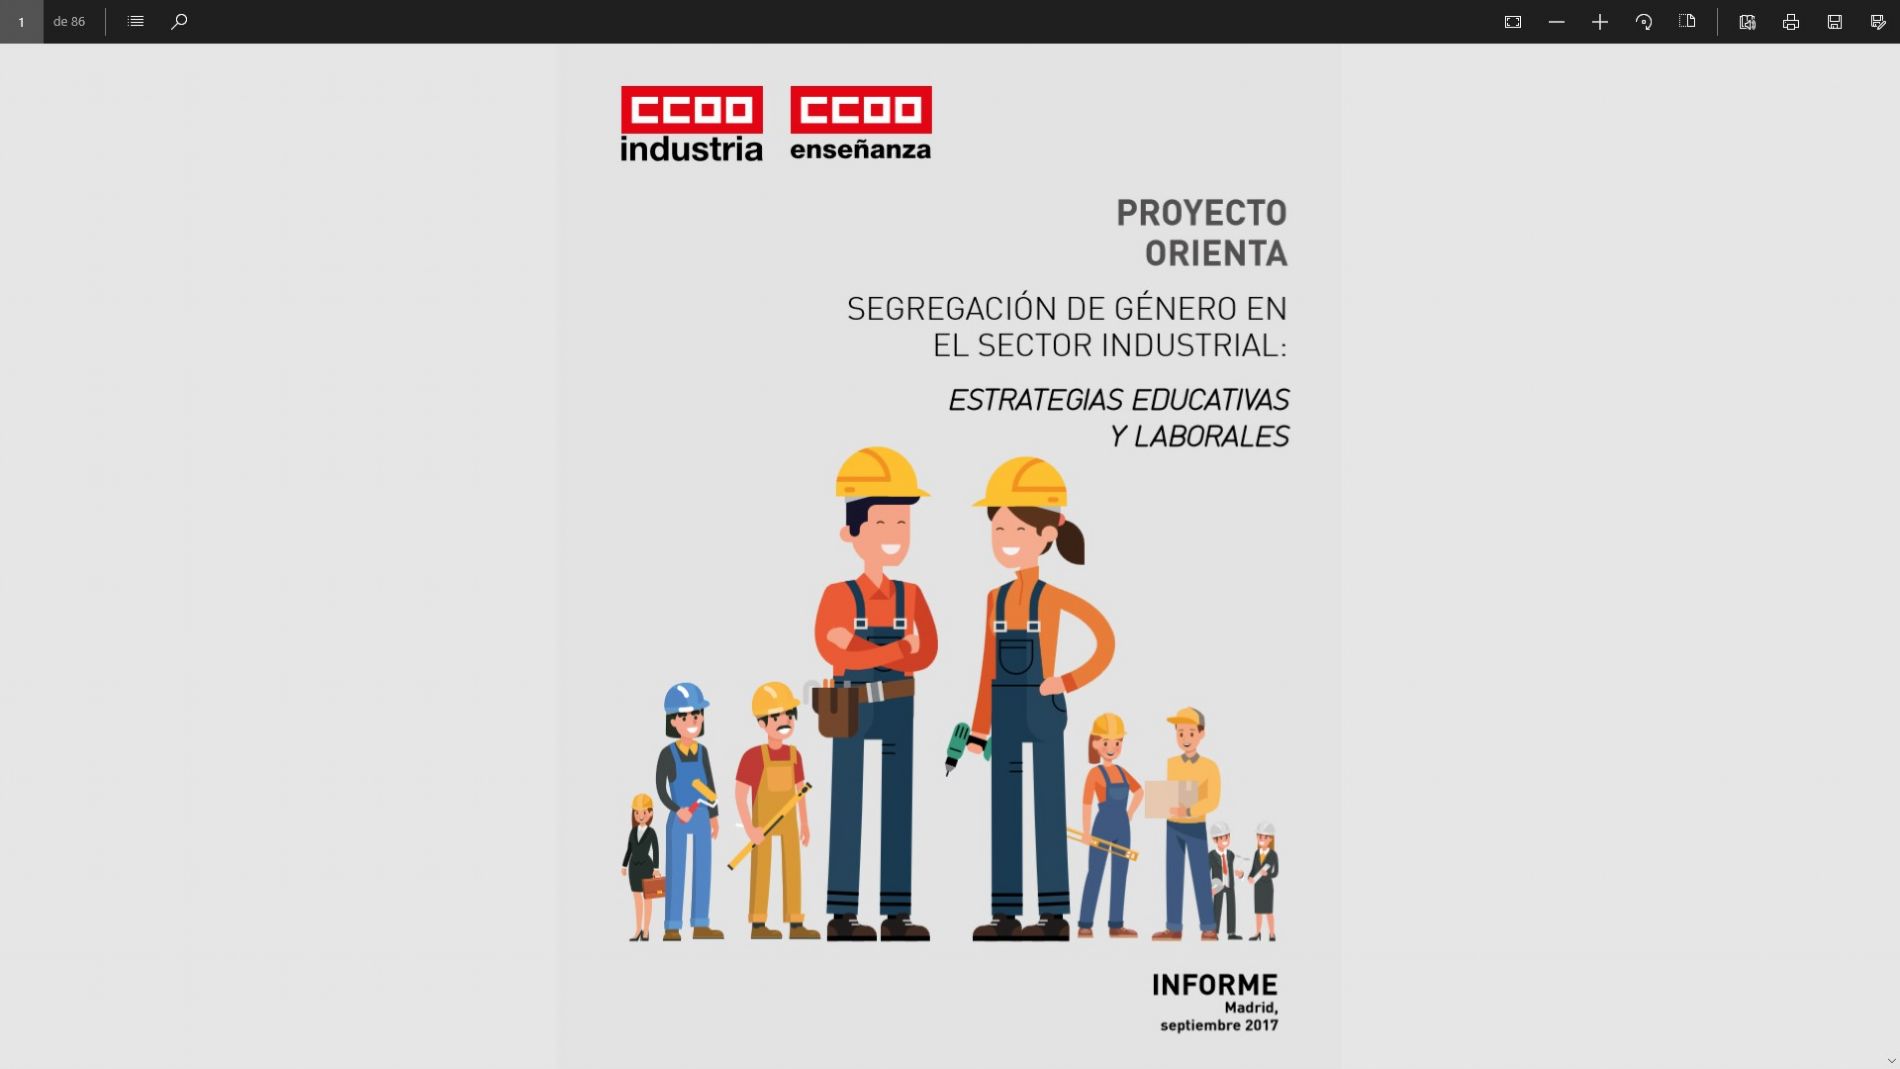 pantallazo proyecto orienta ccoo mujer sector industrial